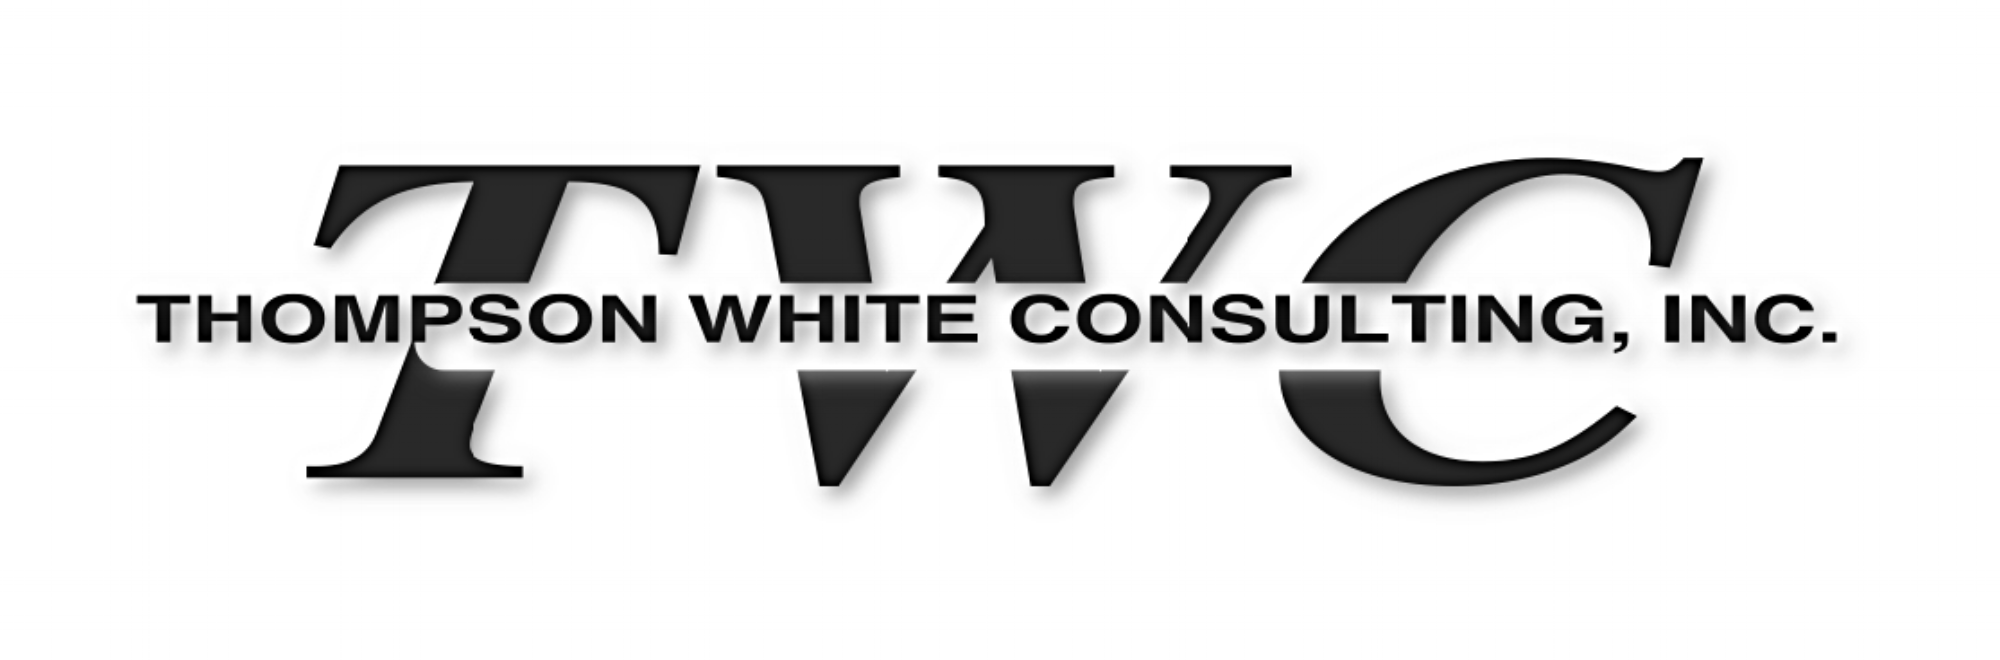 Thompson White Consulting, Inc.